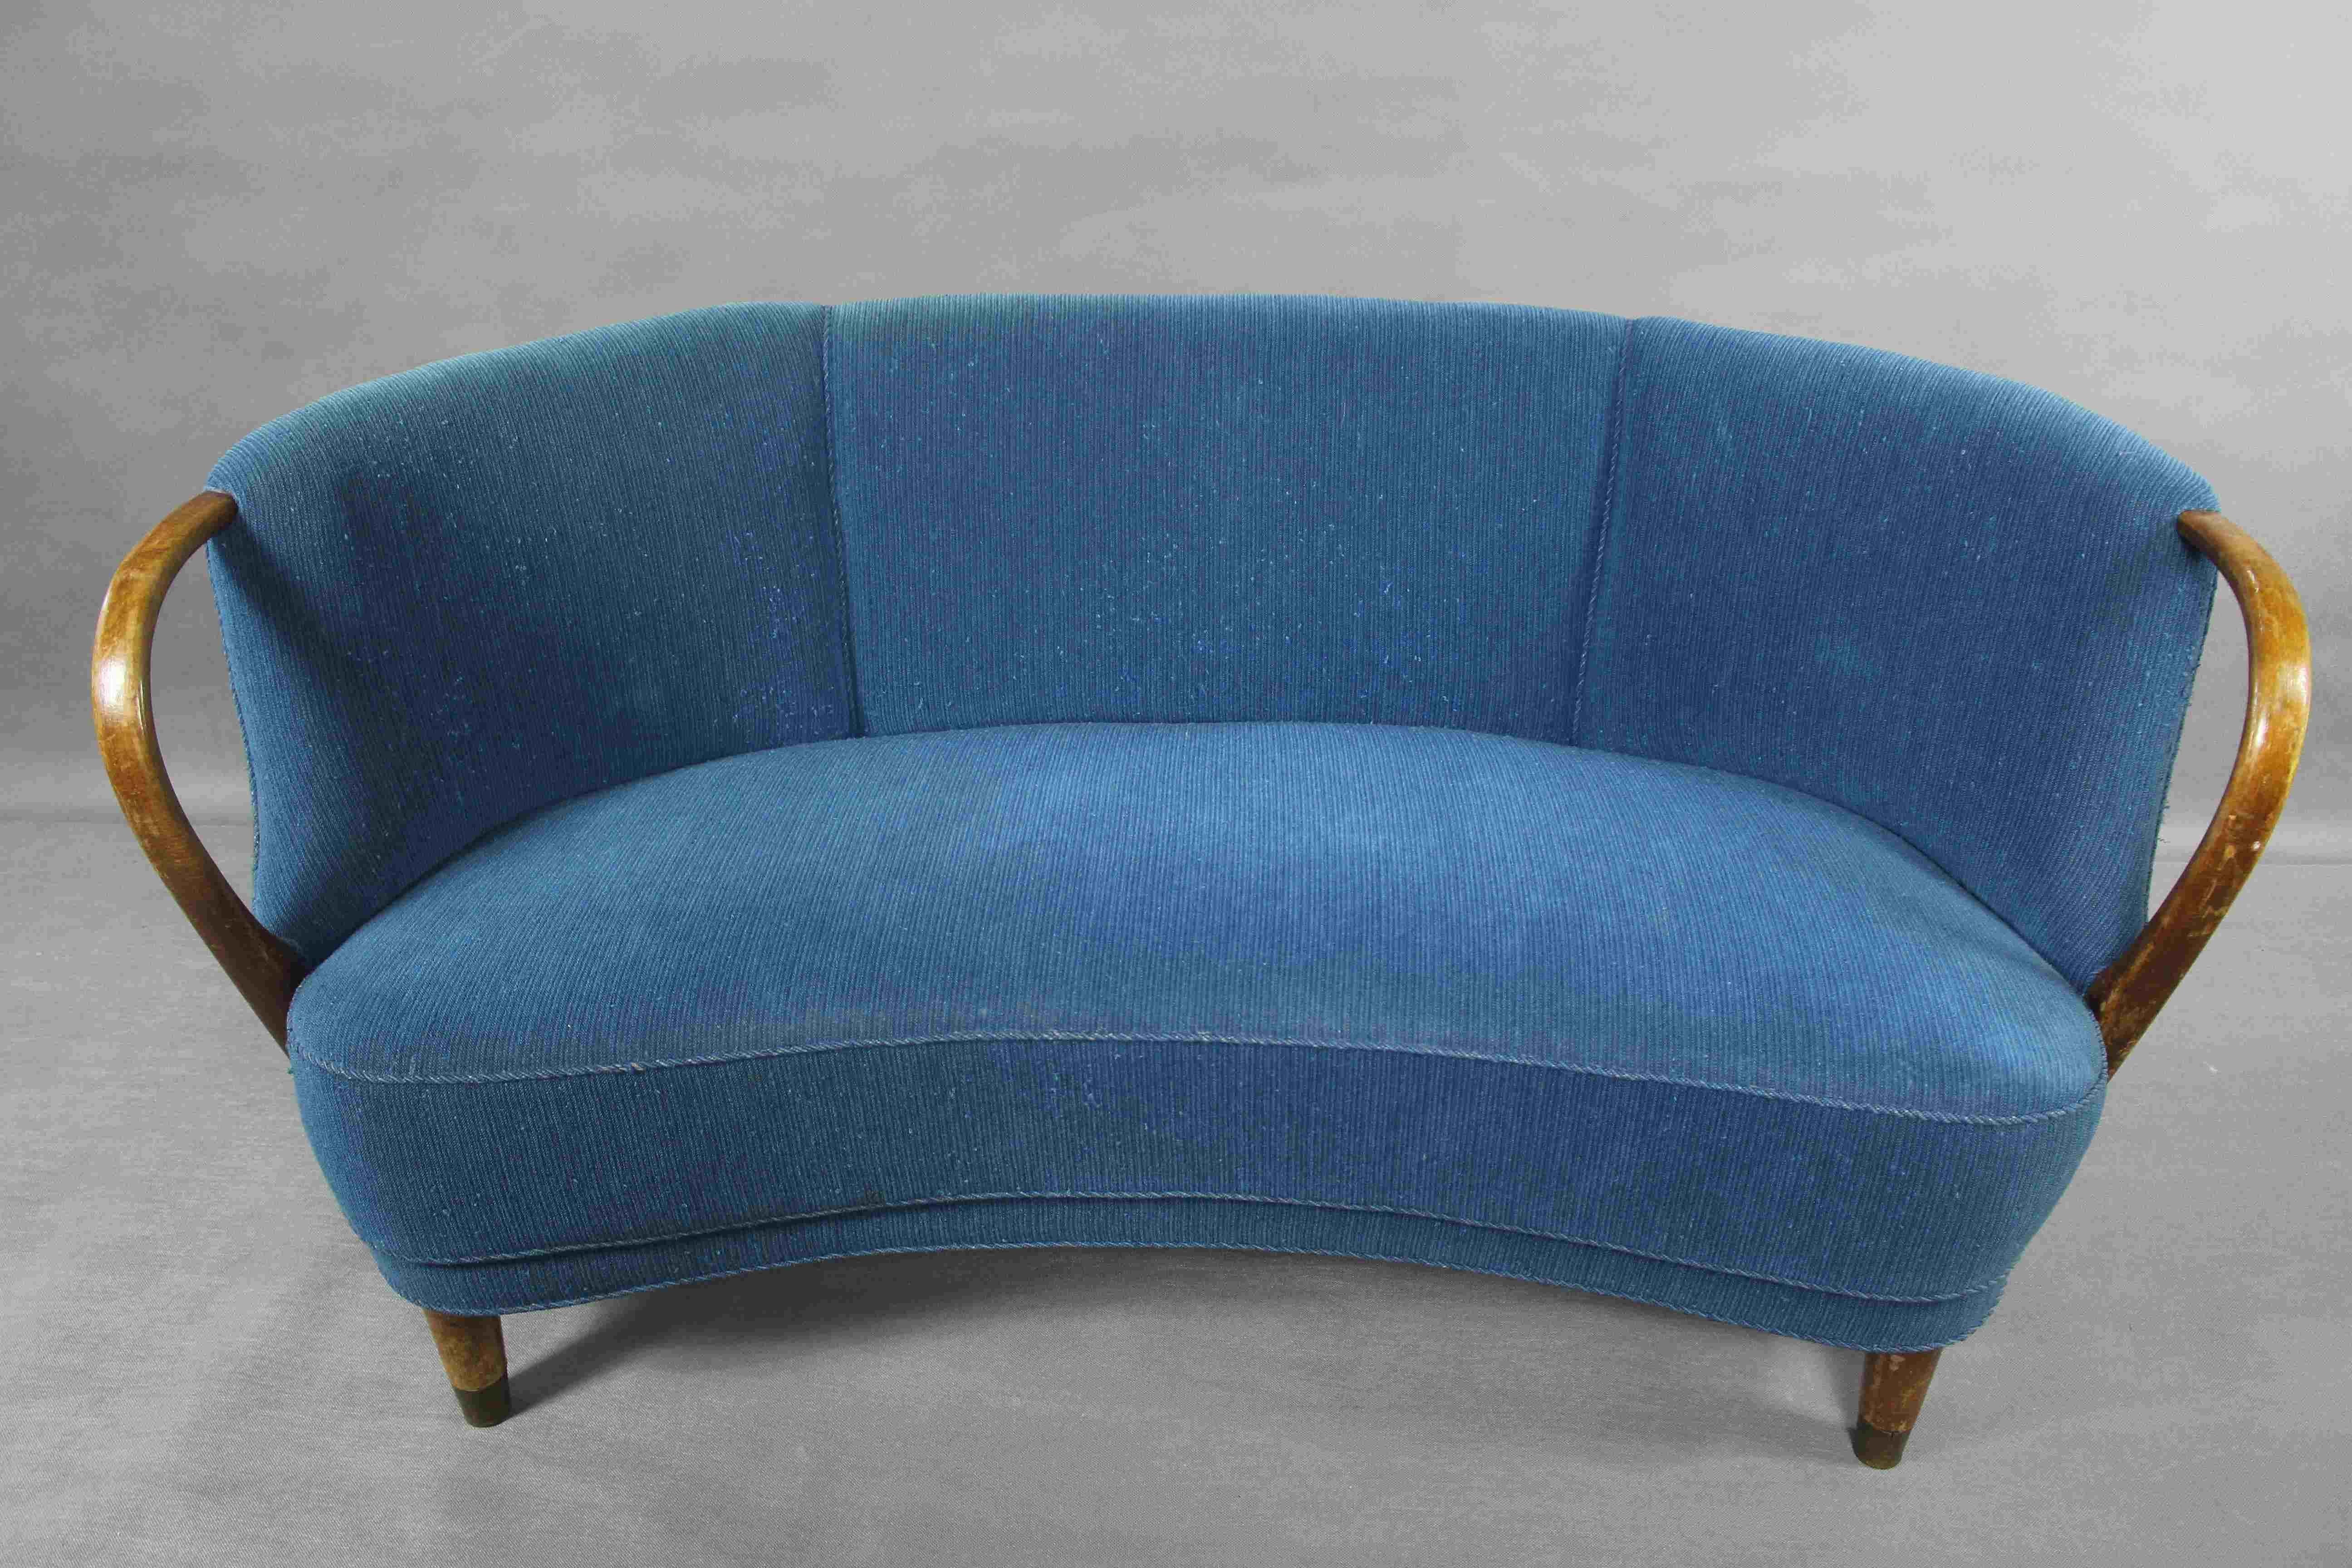 Scandinavian Modern 1950s Danish Blue Banana Sofa by N.A. Jørgensen